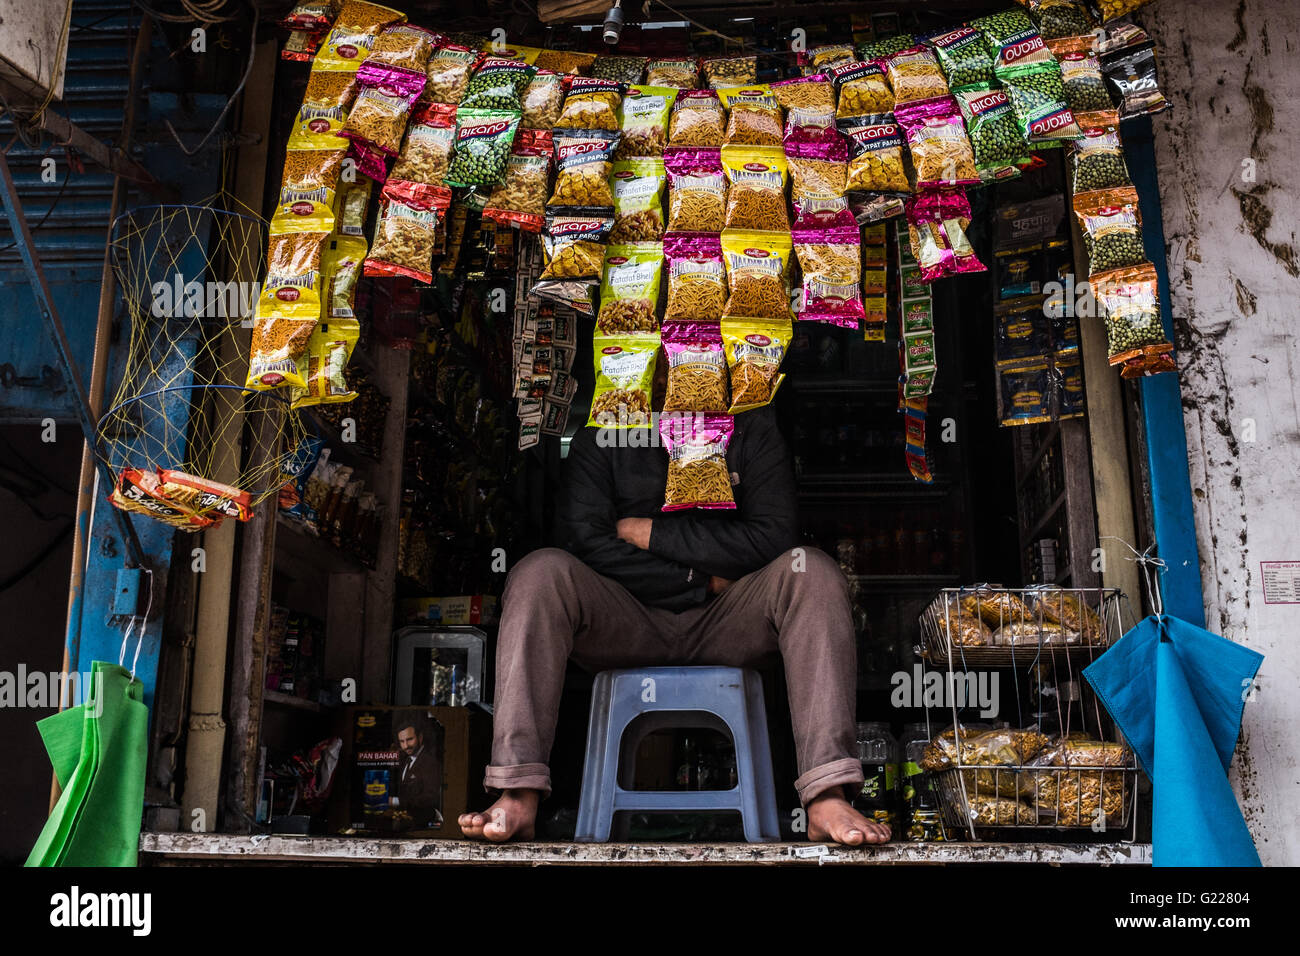 Man sat behind display of packages of food in Delhi, India. Stock Photo